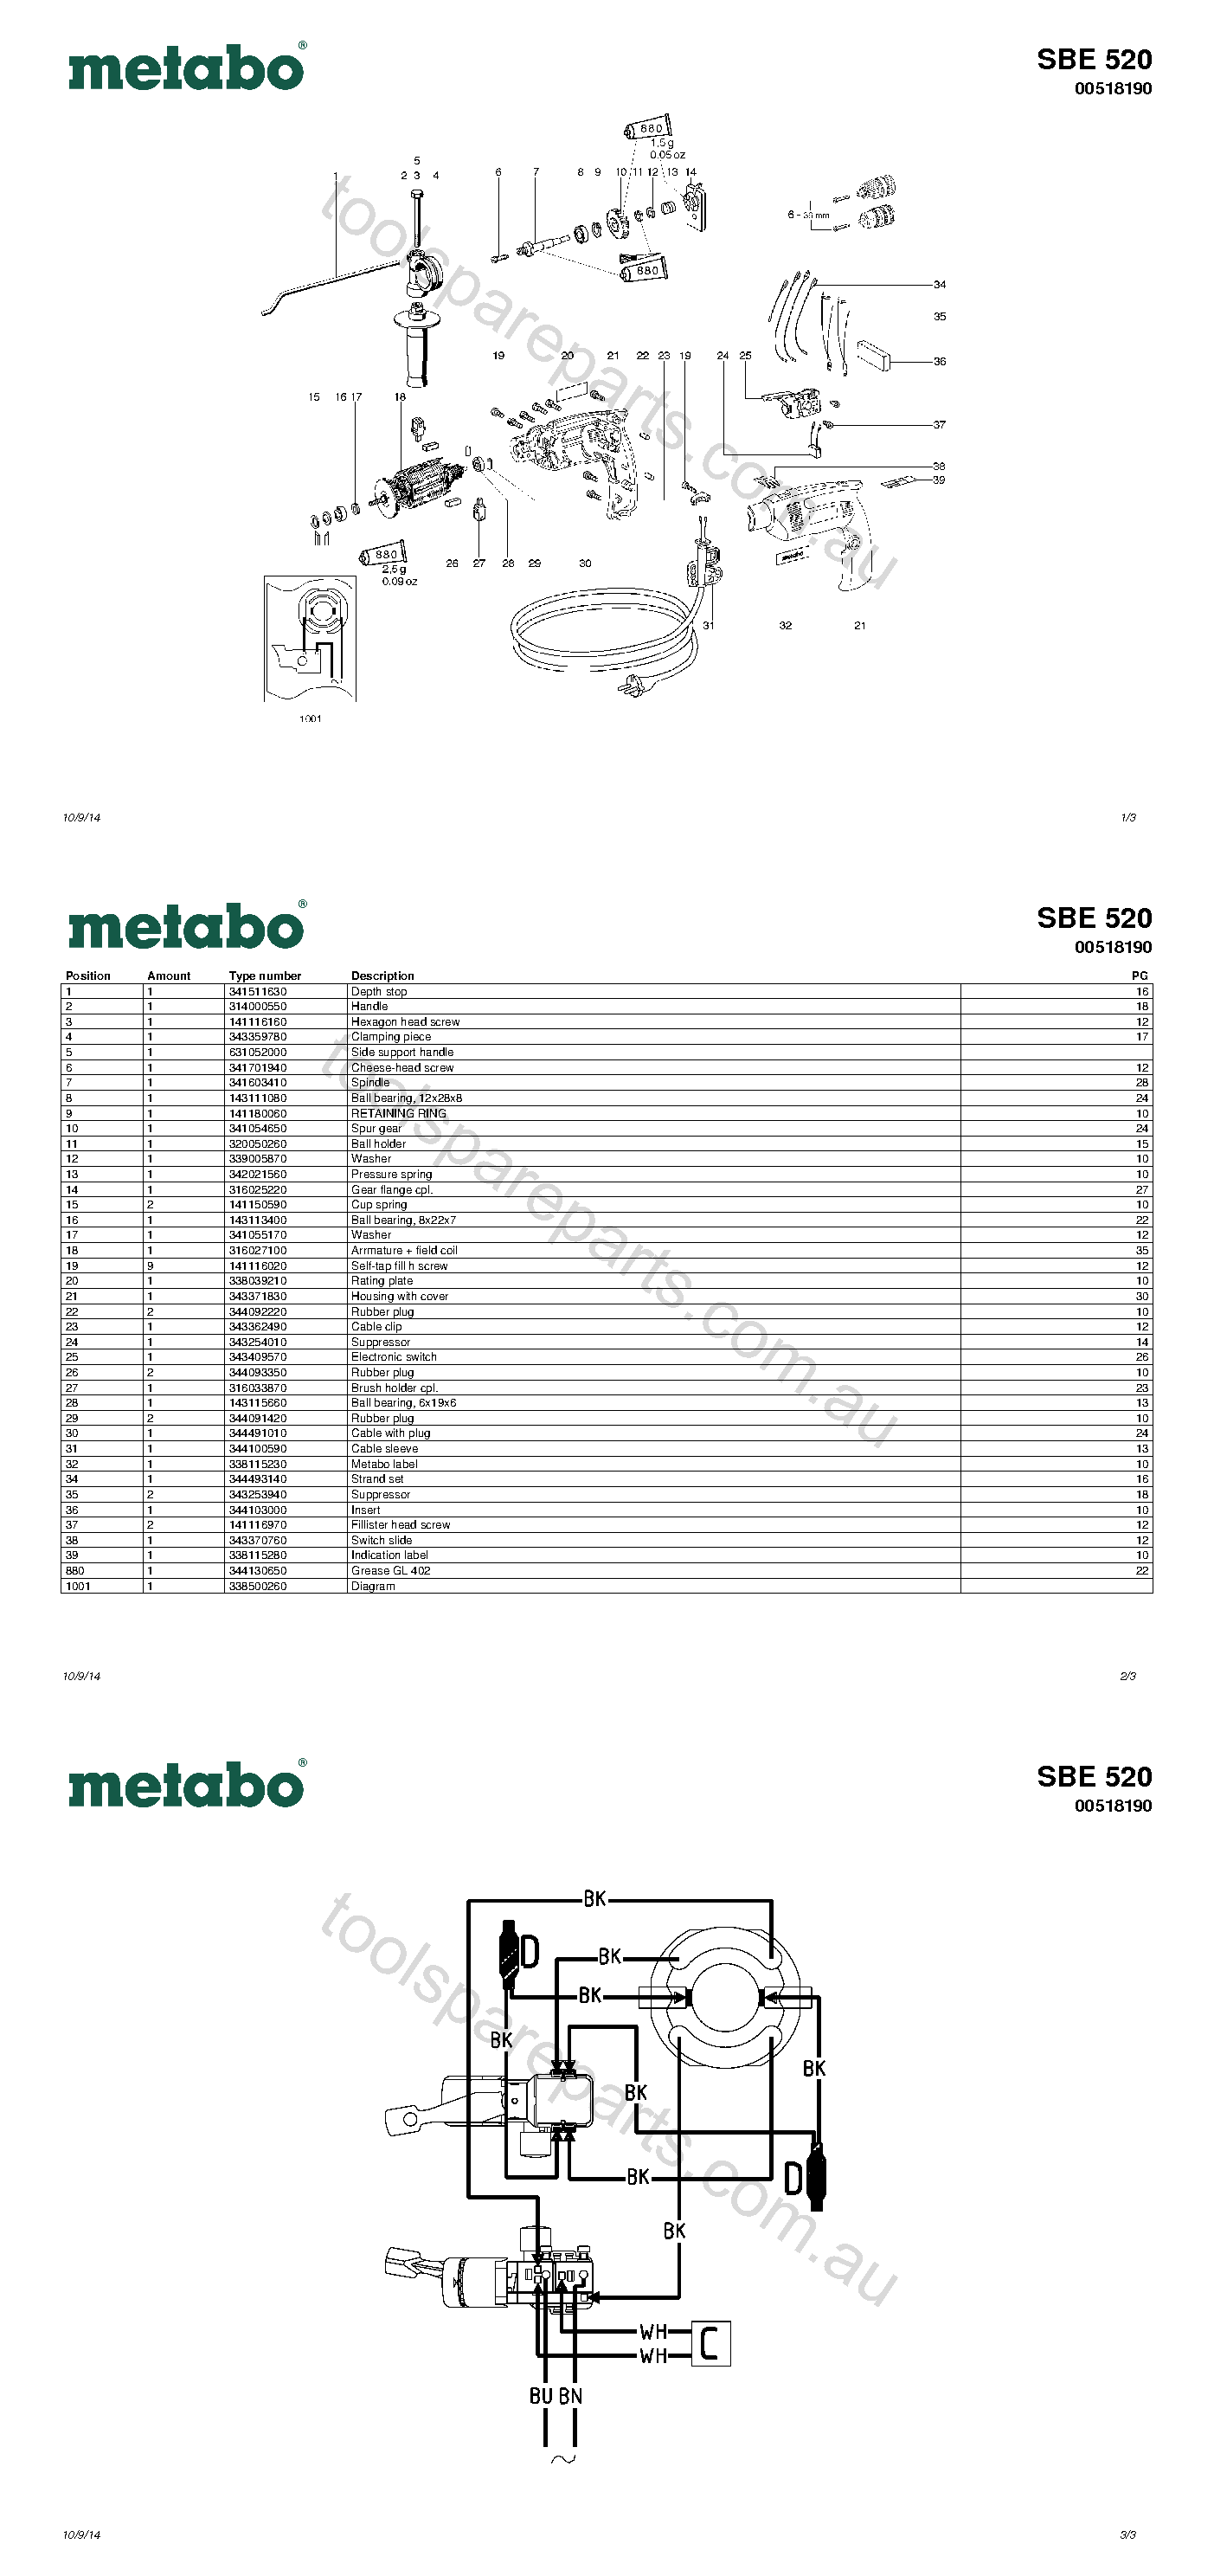 Metabo SBE 520 00518190  Diagram 1